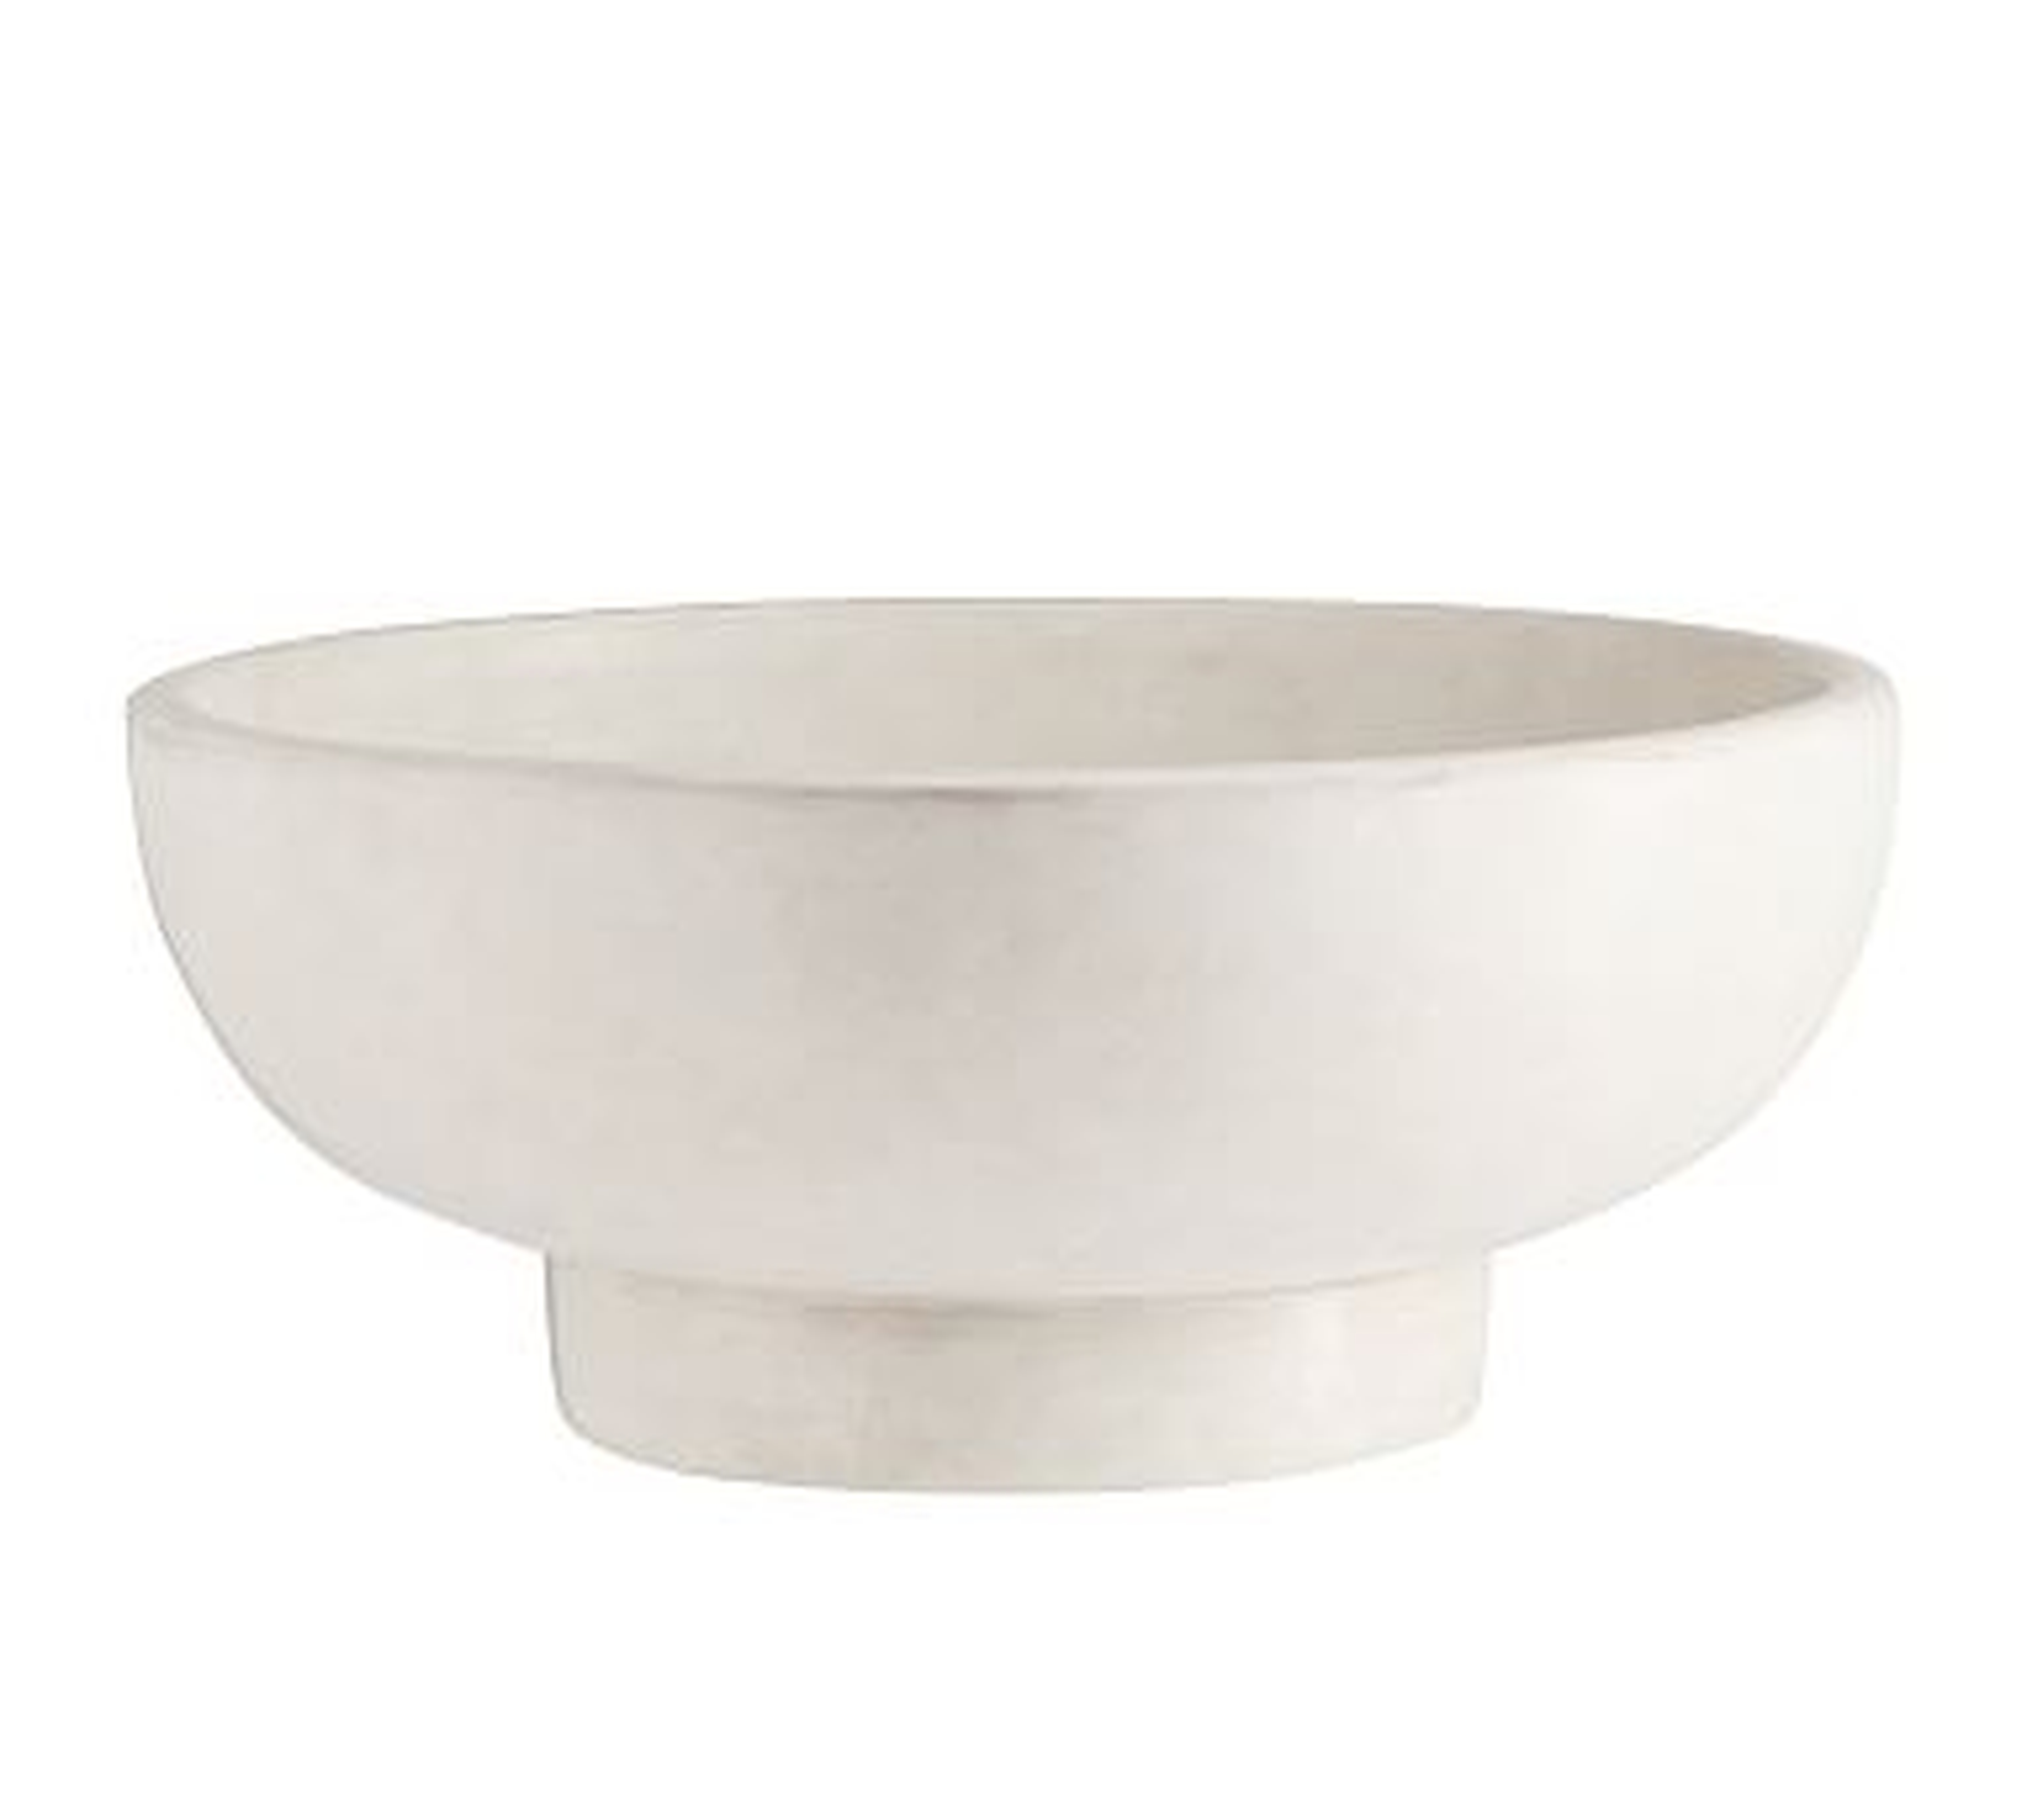 Orion Ceramic Bowl, White - Pottery Barn